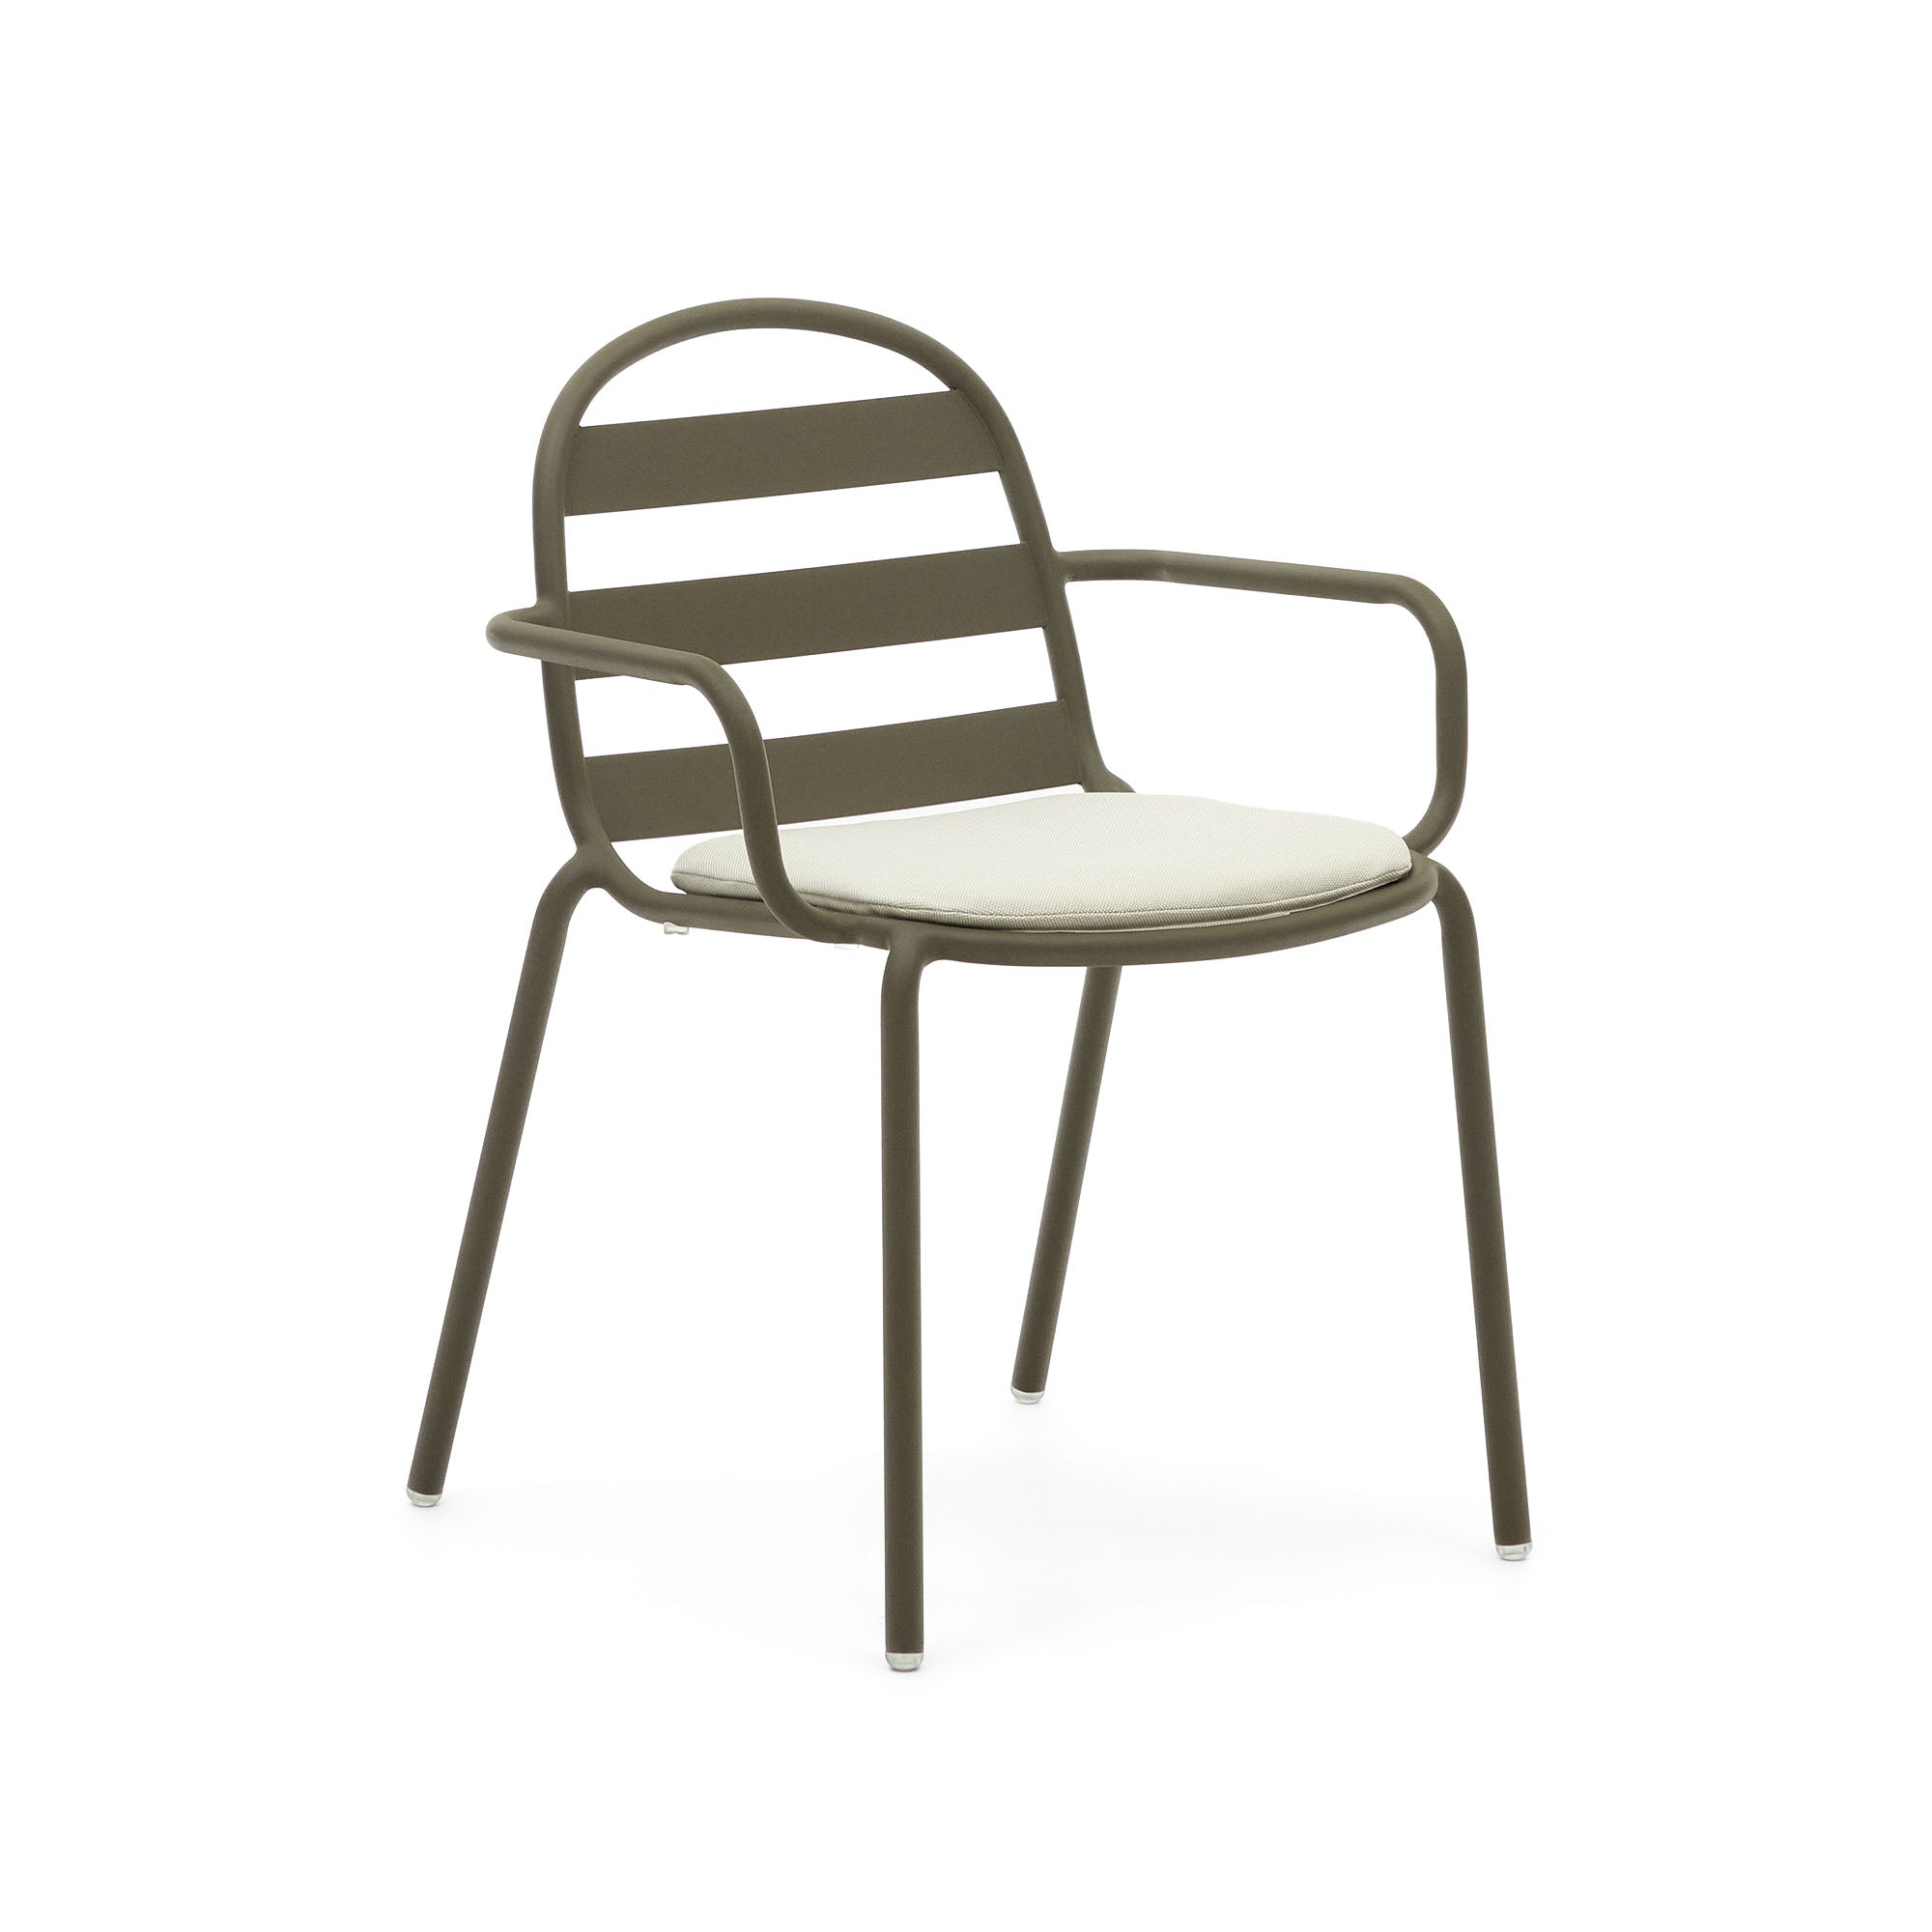 Joncols chair cushion in beige, 43 x 41 cm